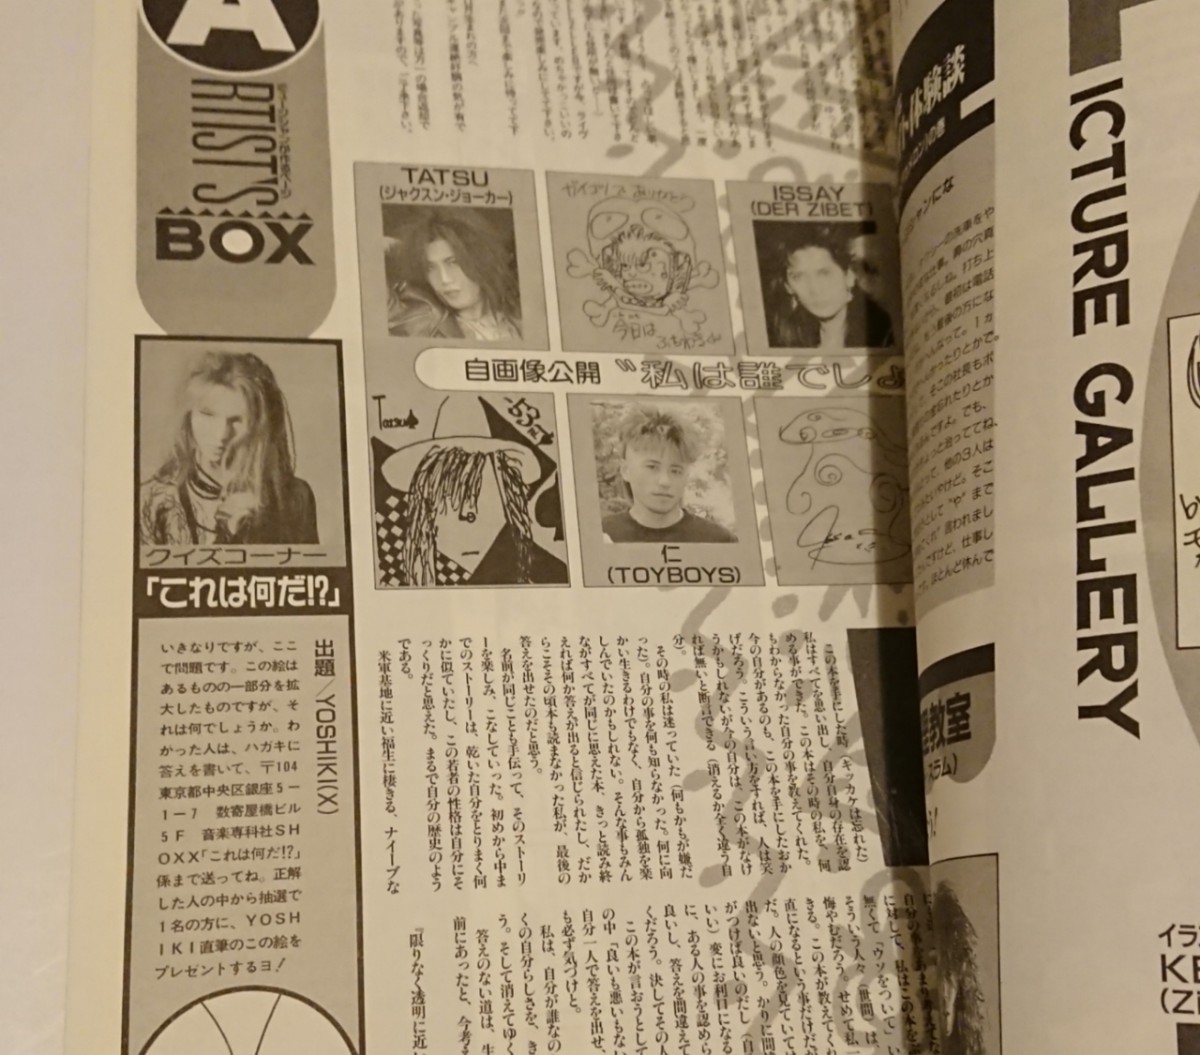 SHOXX アーティストボックスコレクション Vol.1 V系雑誌 Xjapan 他